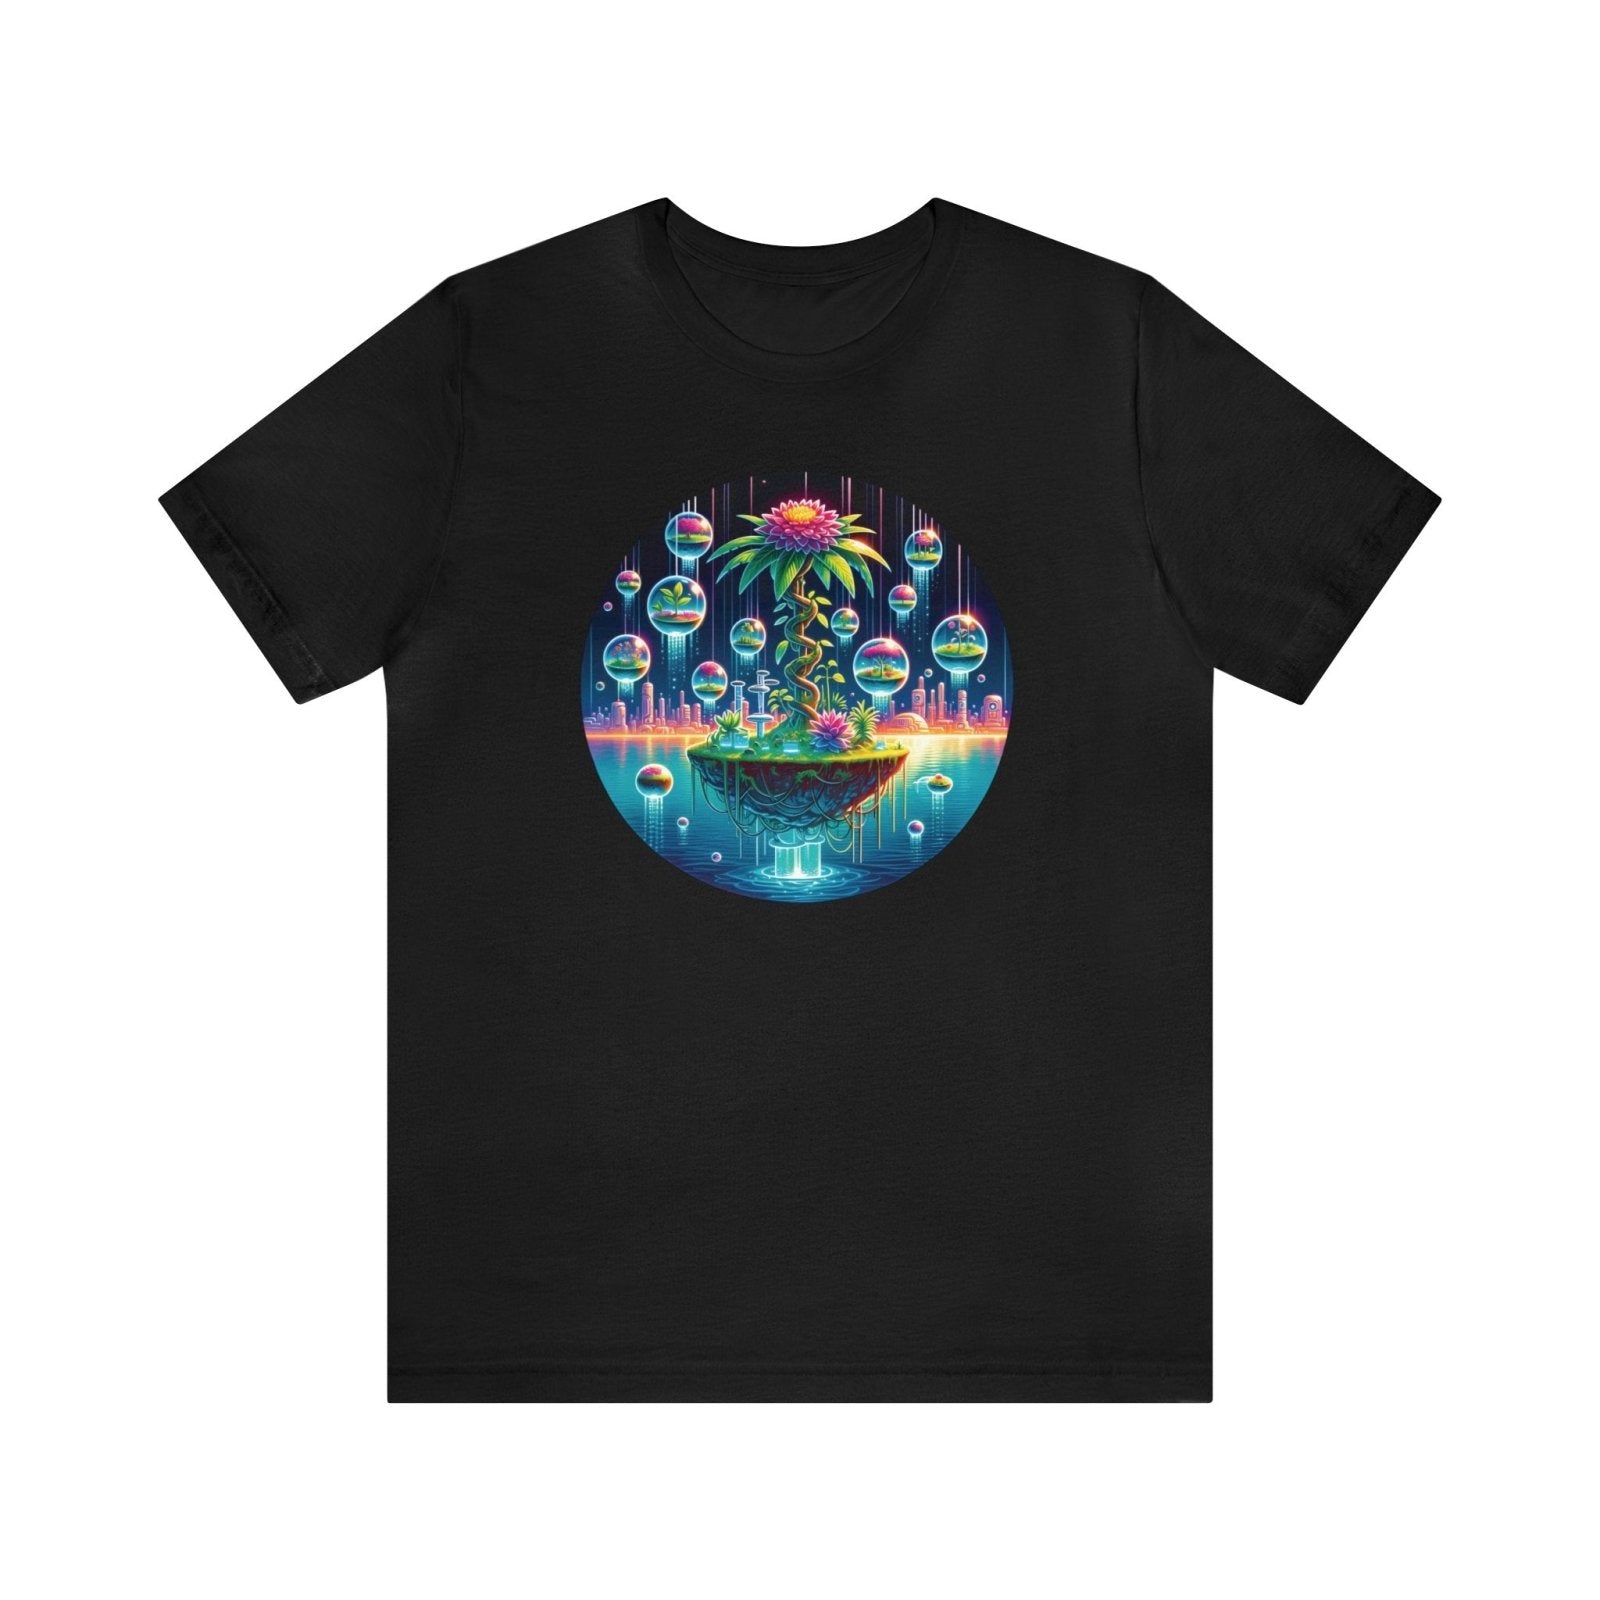 Floral Bubbles Unisex Short Sleeve Tee, botany nerd shirt, futuristic geek shirt, Black - Subtle Blue M